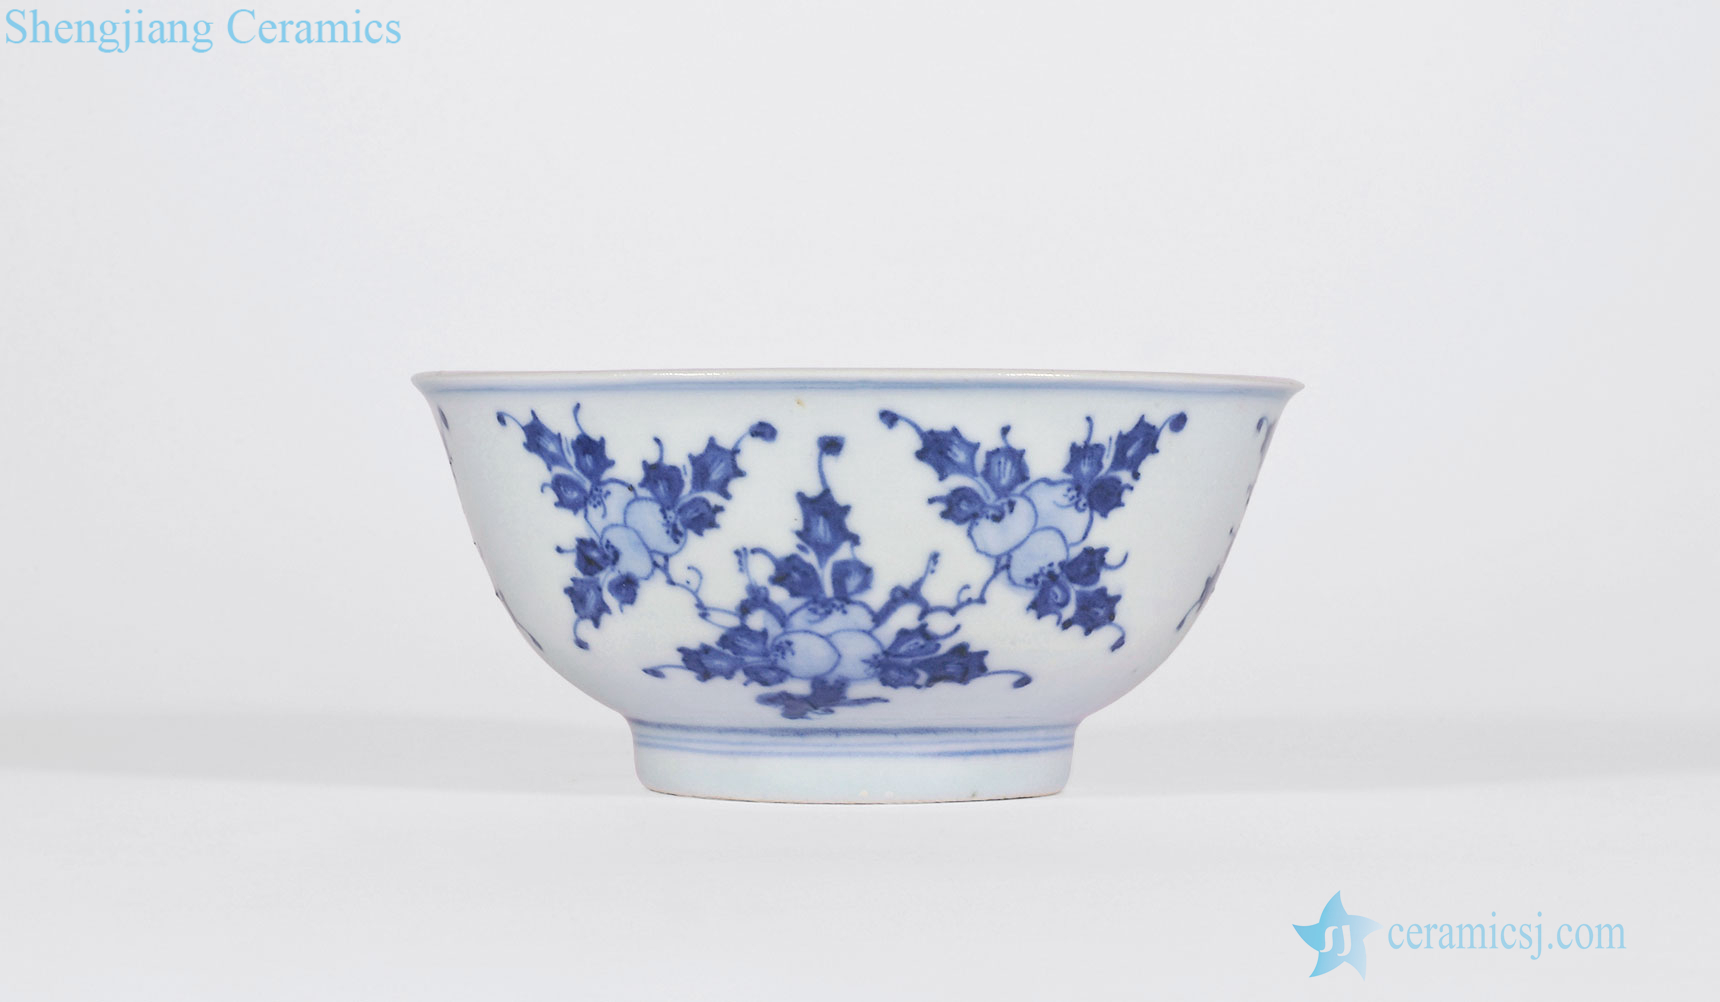 Blue and white fruits and grain qing yongzheng bowl